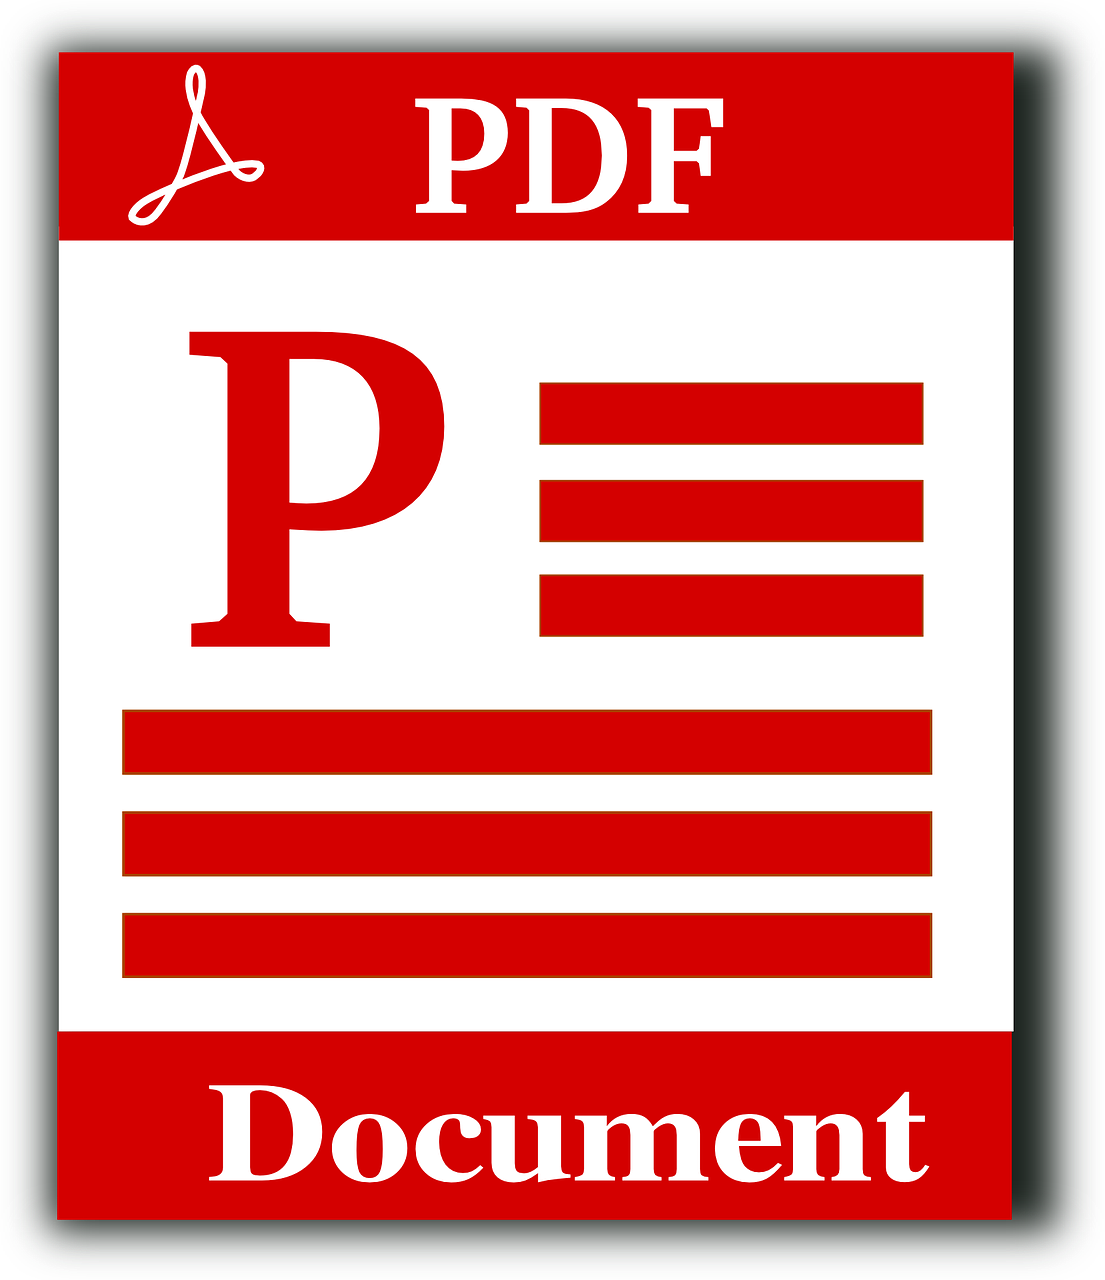 pdf, document, icon-47199.jpg